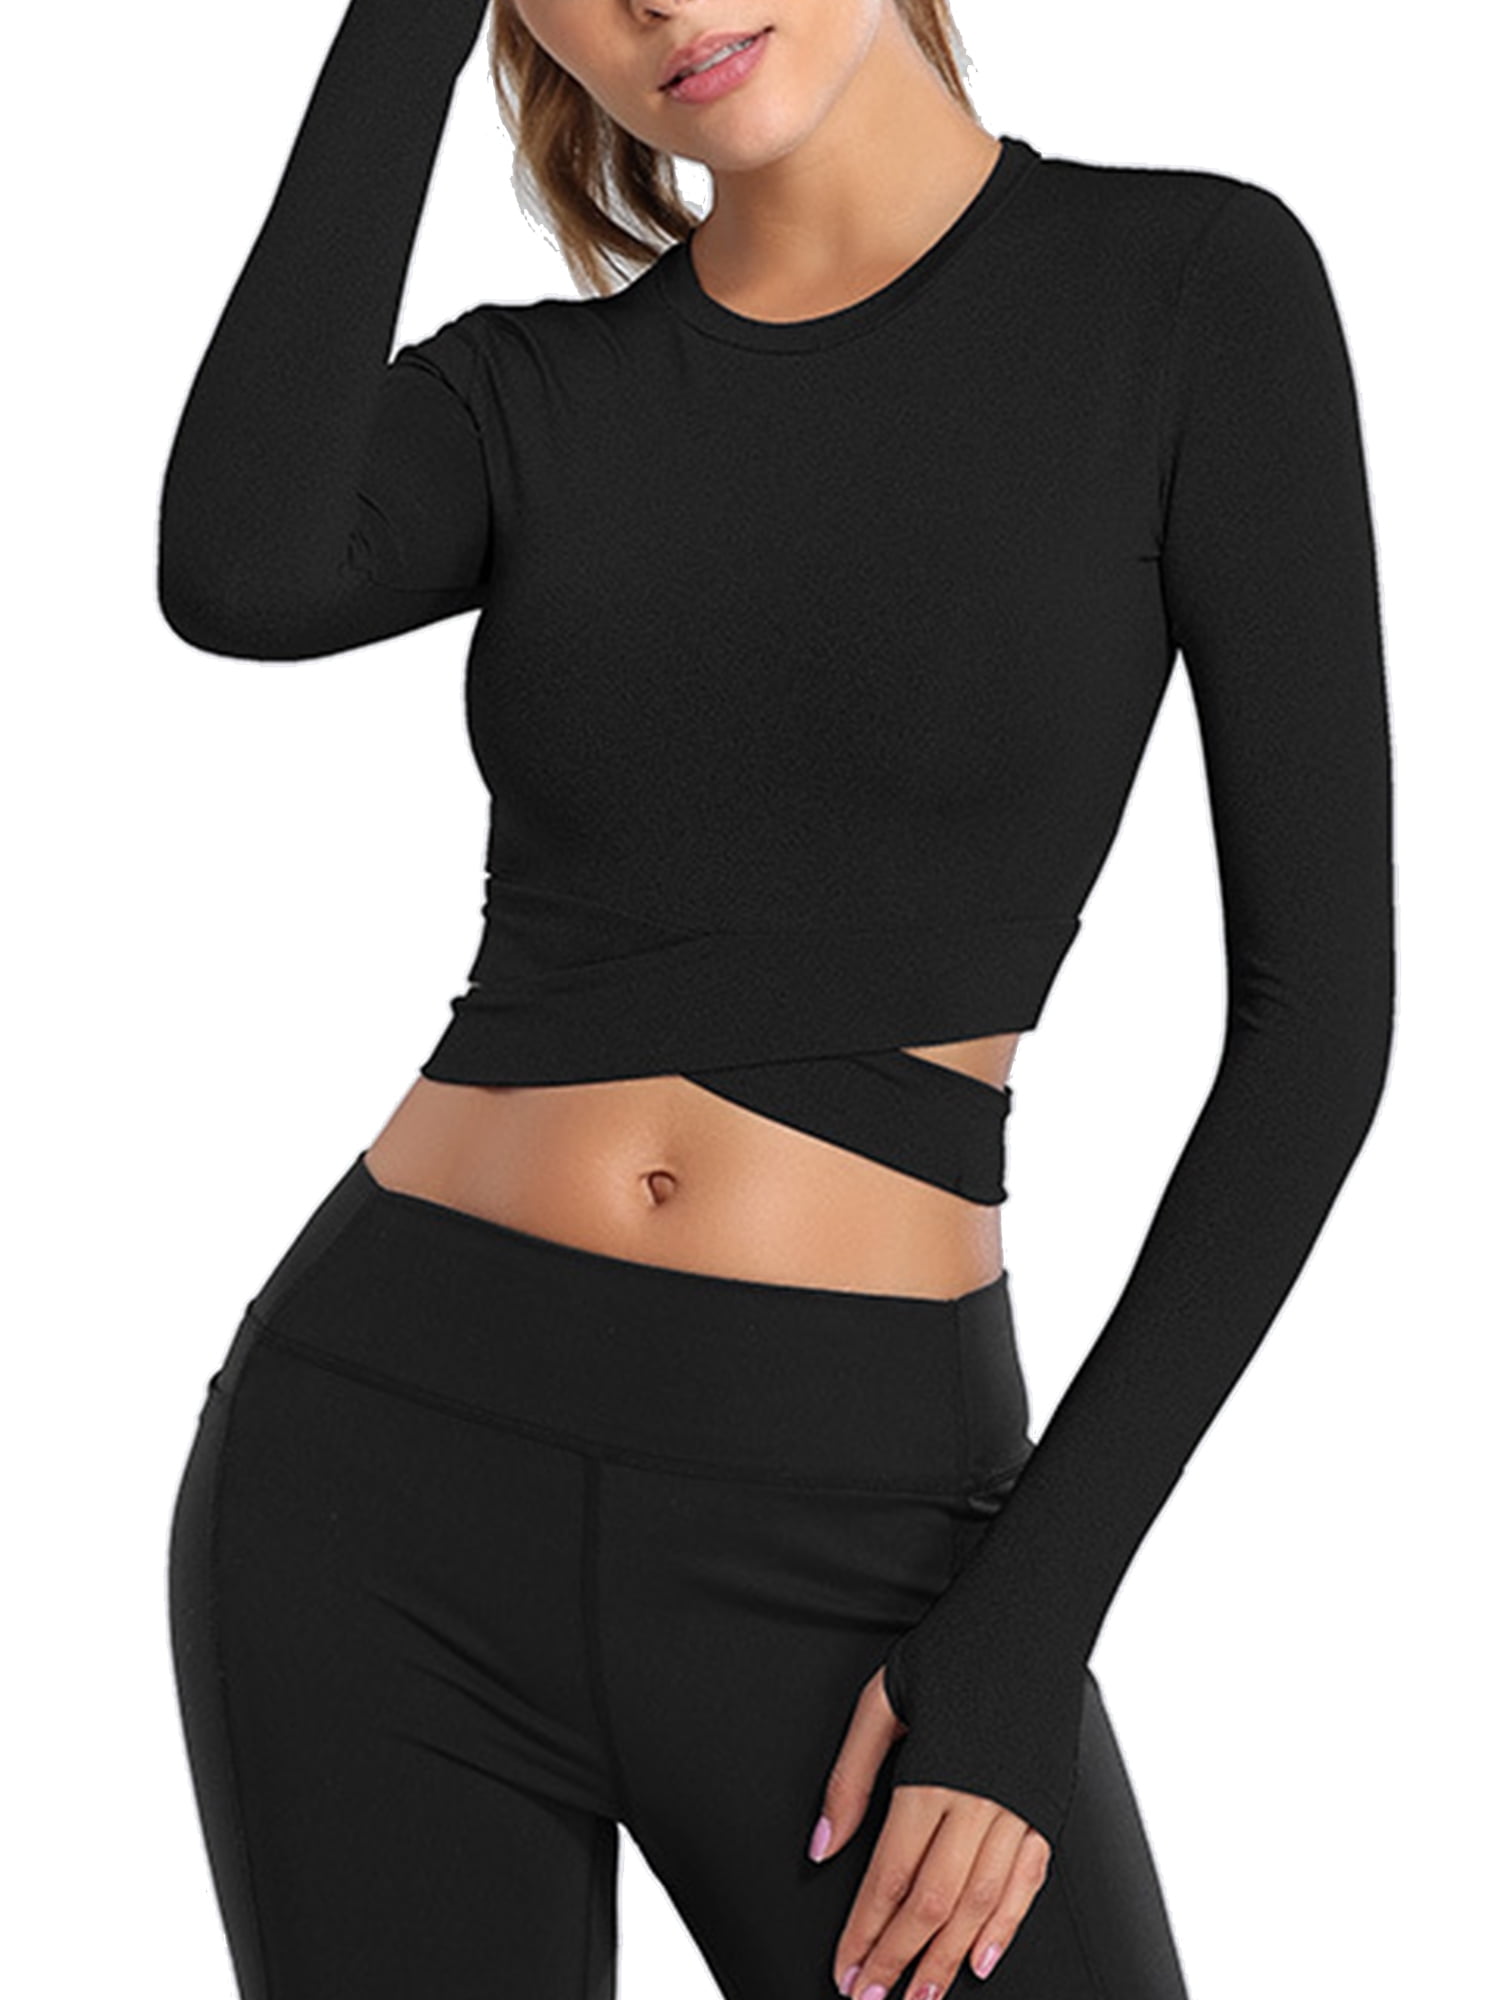 Flenwgo Women's Built-in Bra Yoga Sport Shirt T-Shirt,Short Sleeve Tops  Casual T-Shirt Sleepwear Black US 0-2 at  Women's Clothing store